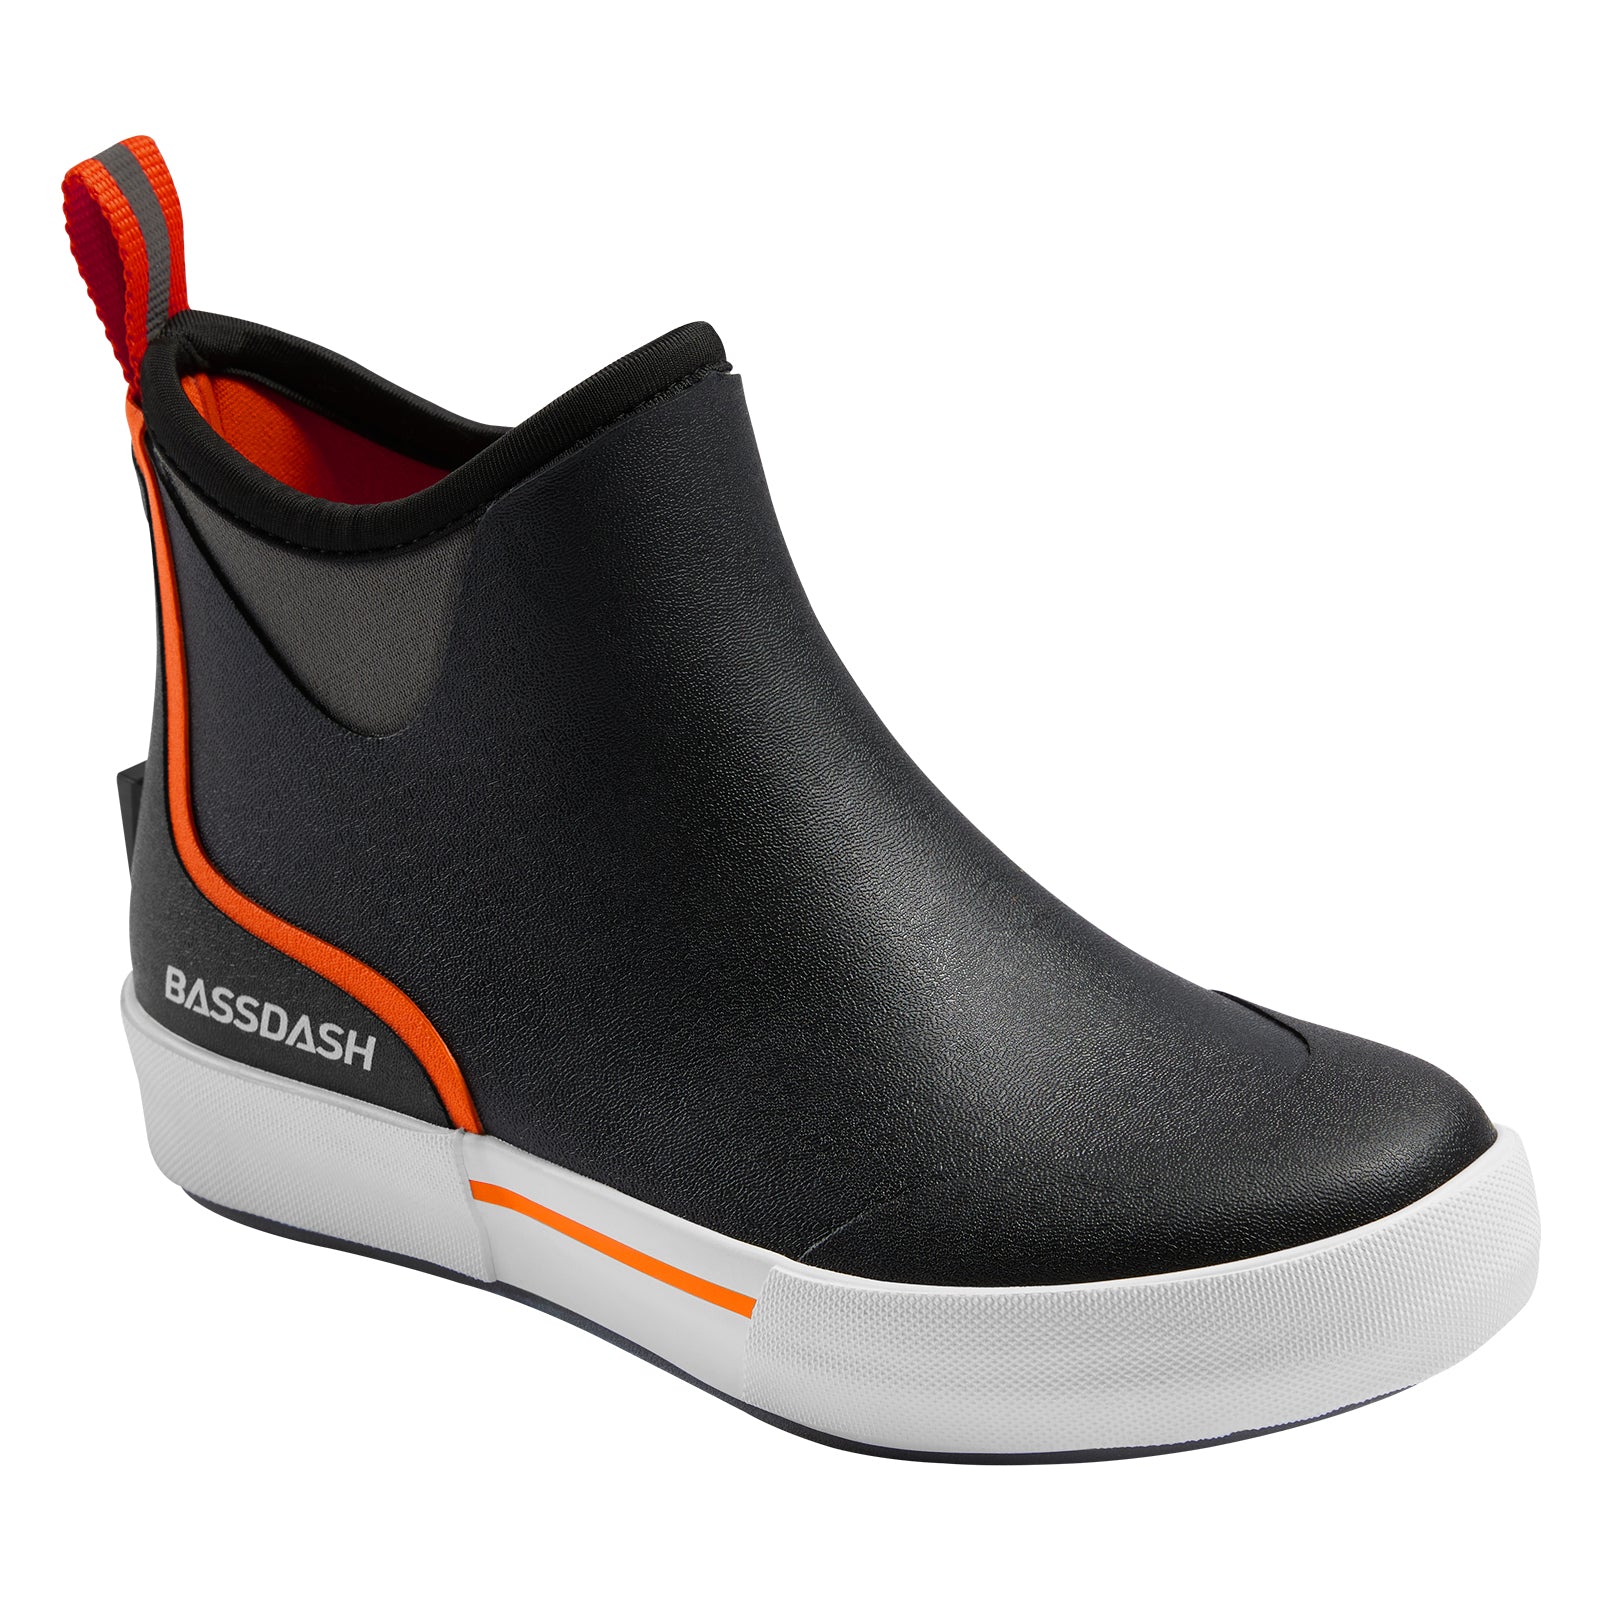 Women’s 4.5” Waterproof Deck Boots